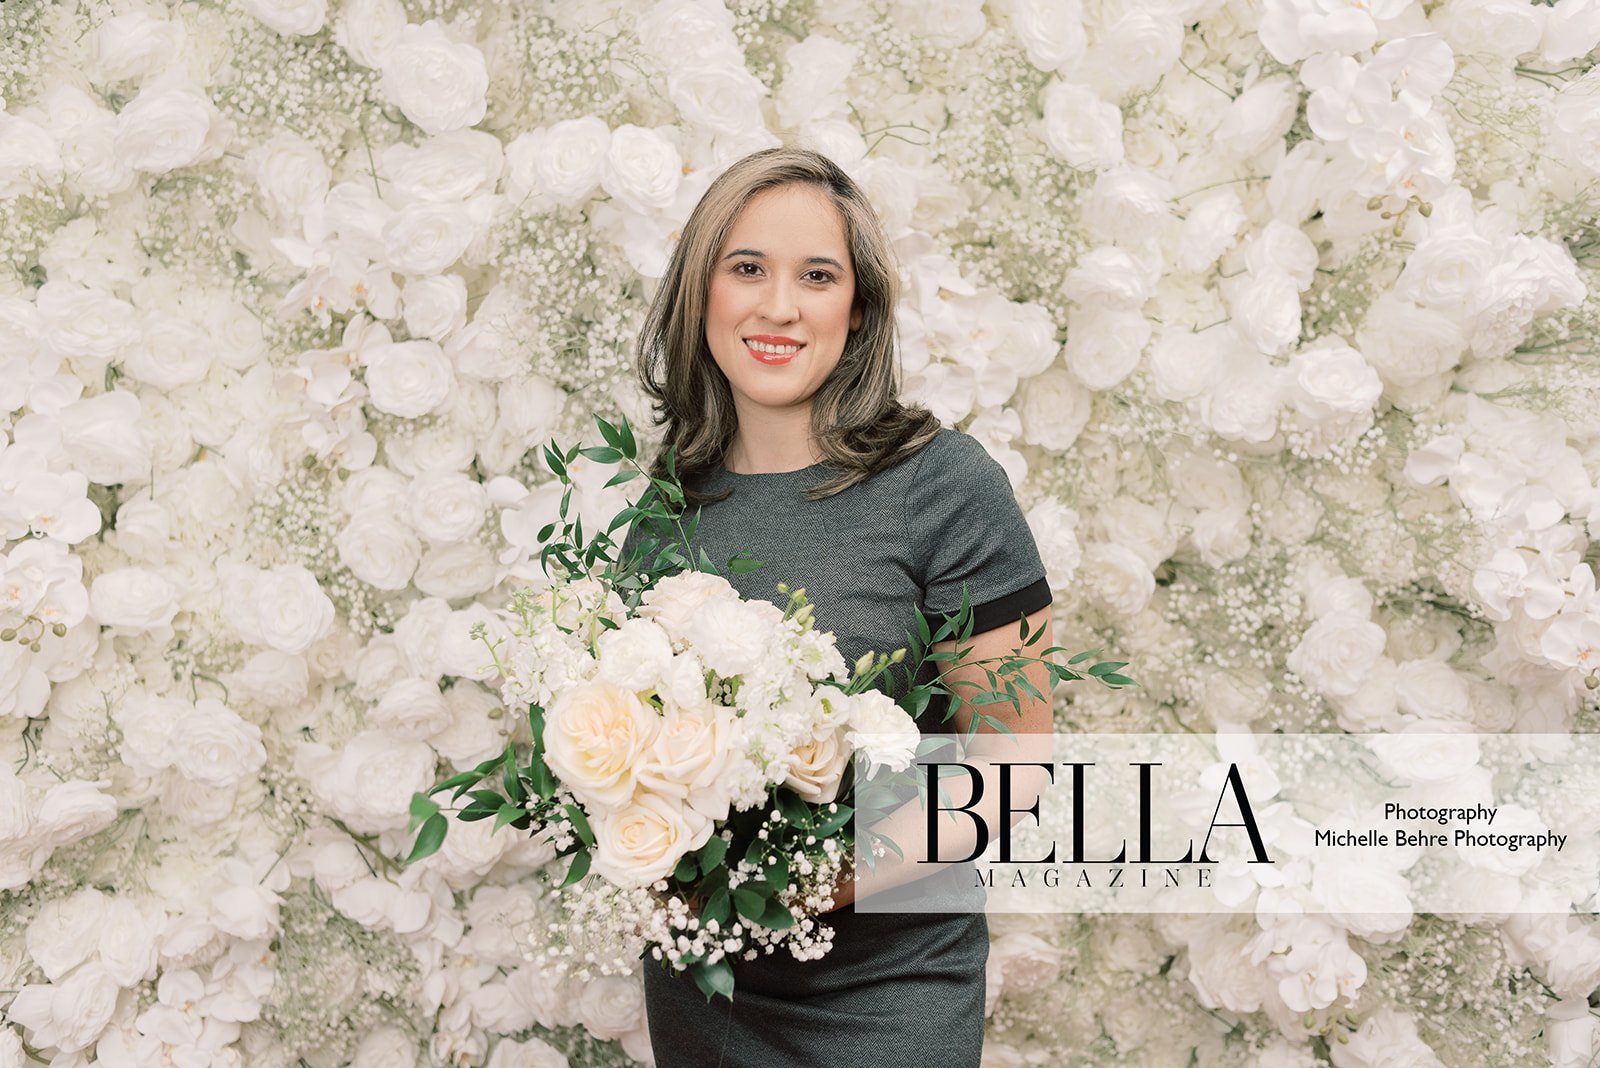 Michelle-Behre-Photography-BELLA-Magazine-Wedding-Event-La-Pulperia-New-York-6.jpg